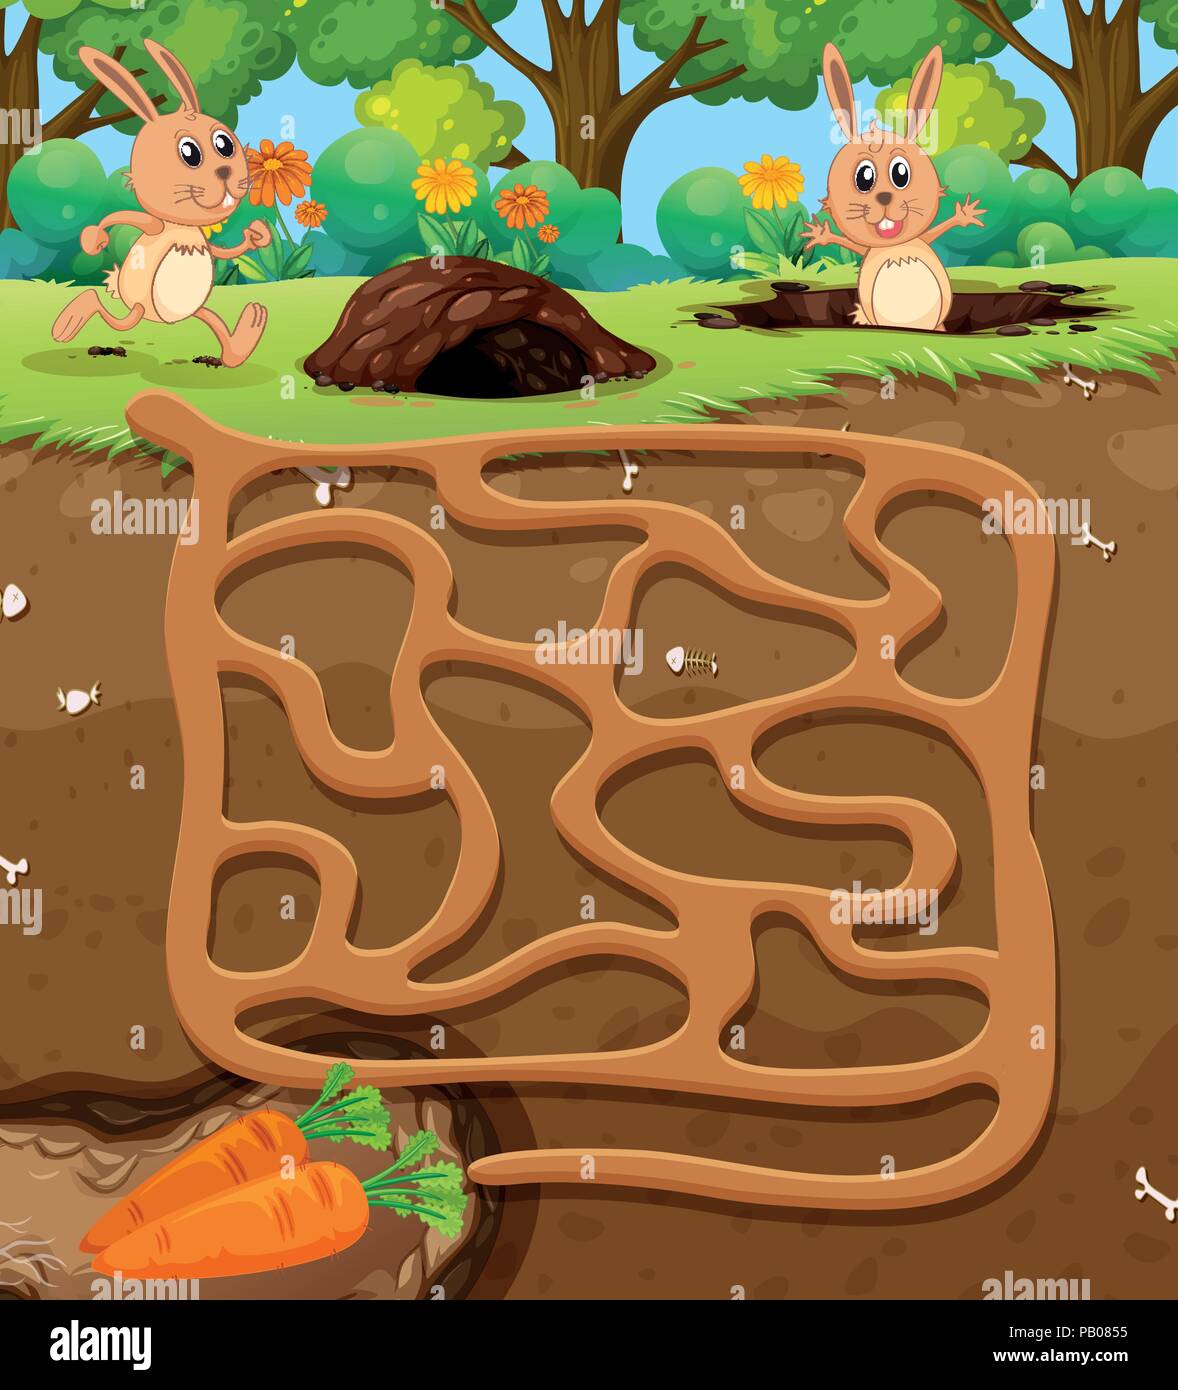 Rabbit finding carrot maze game illustration Stock Vector